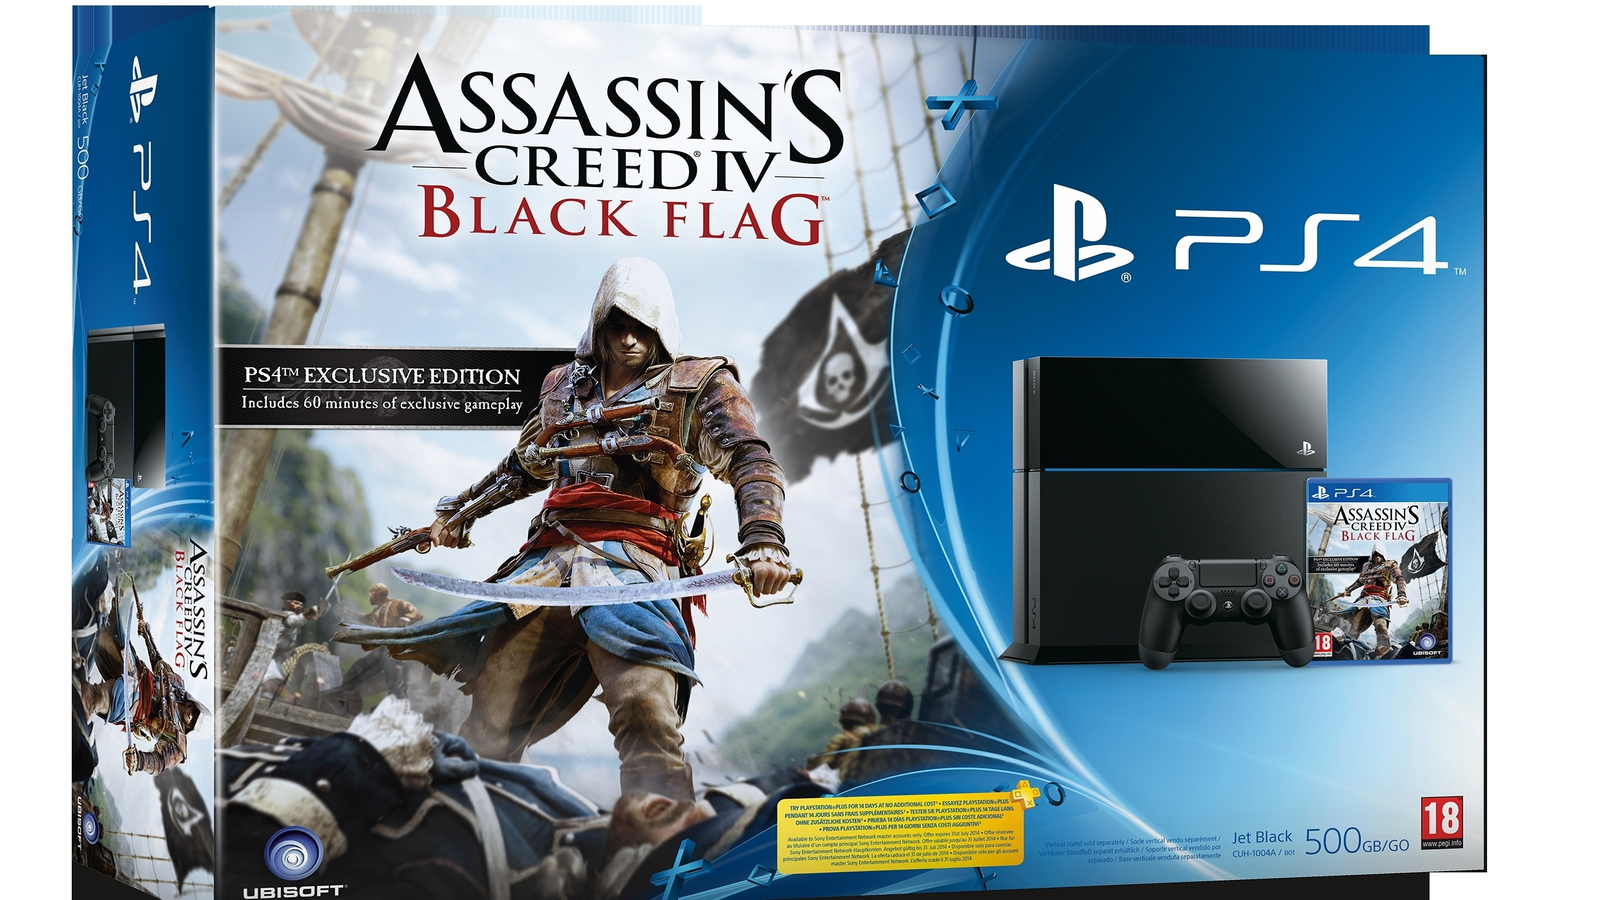 Udlænding panel Beskatning Assassin's Creed 4 PS4 bundle announced | Eurogamer.net